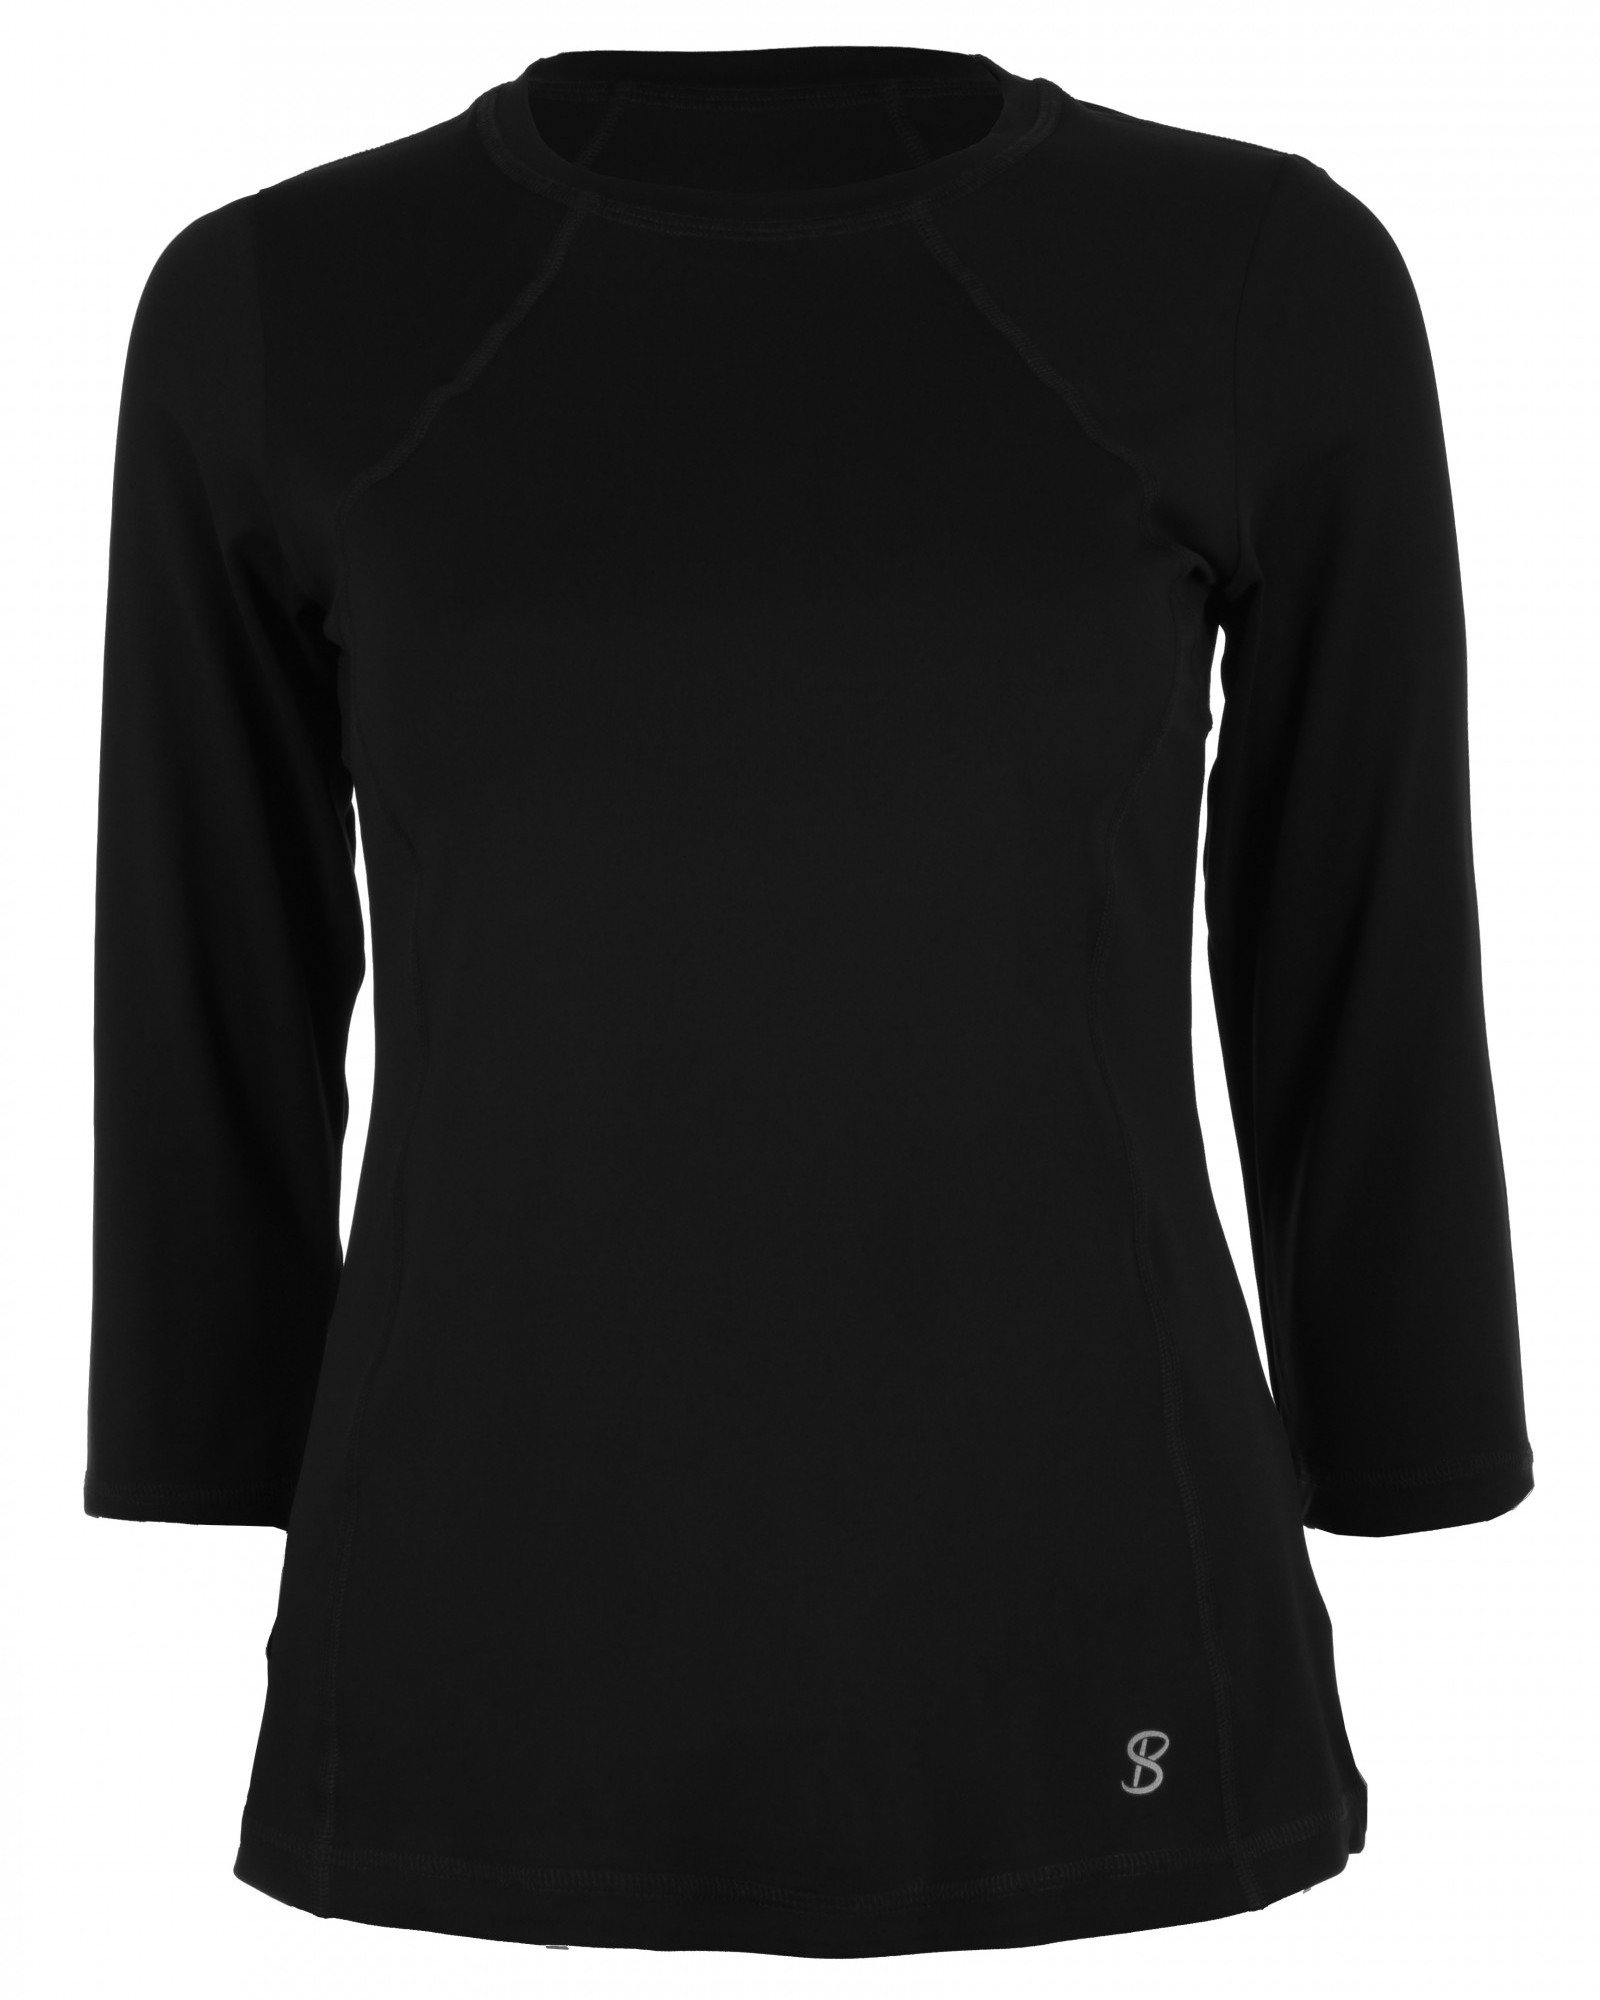 Sofibella Women&amp;apos;s Classic 3/4 Sleeve Tennis Top (Black)